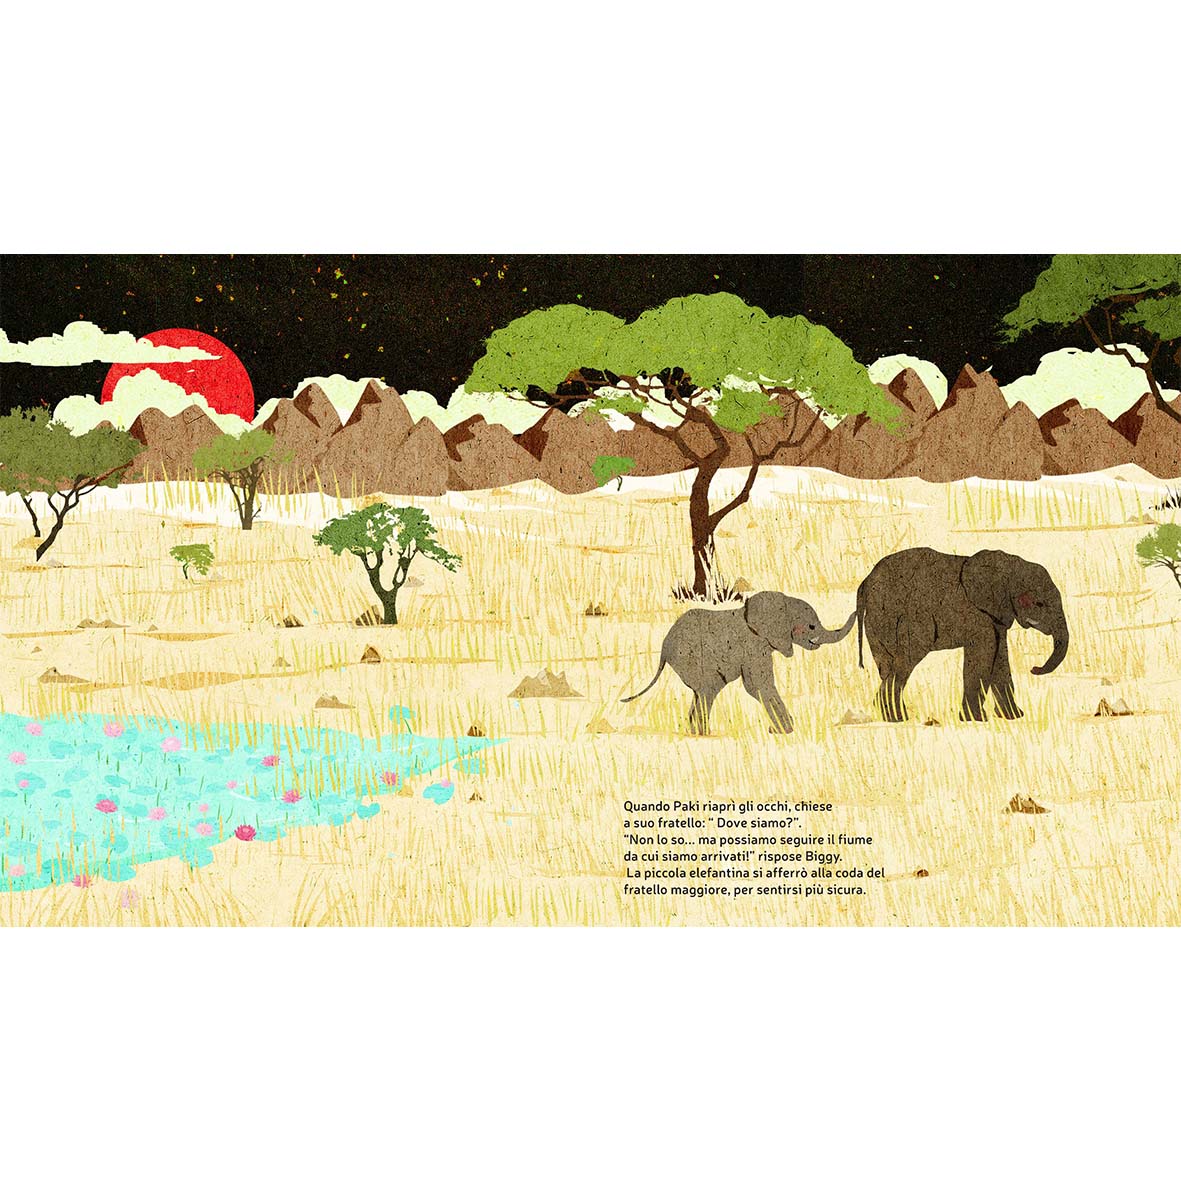 Paki and Biggy - elephants in the savannah